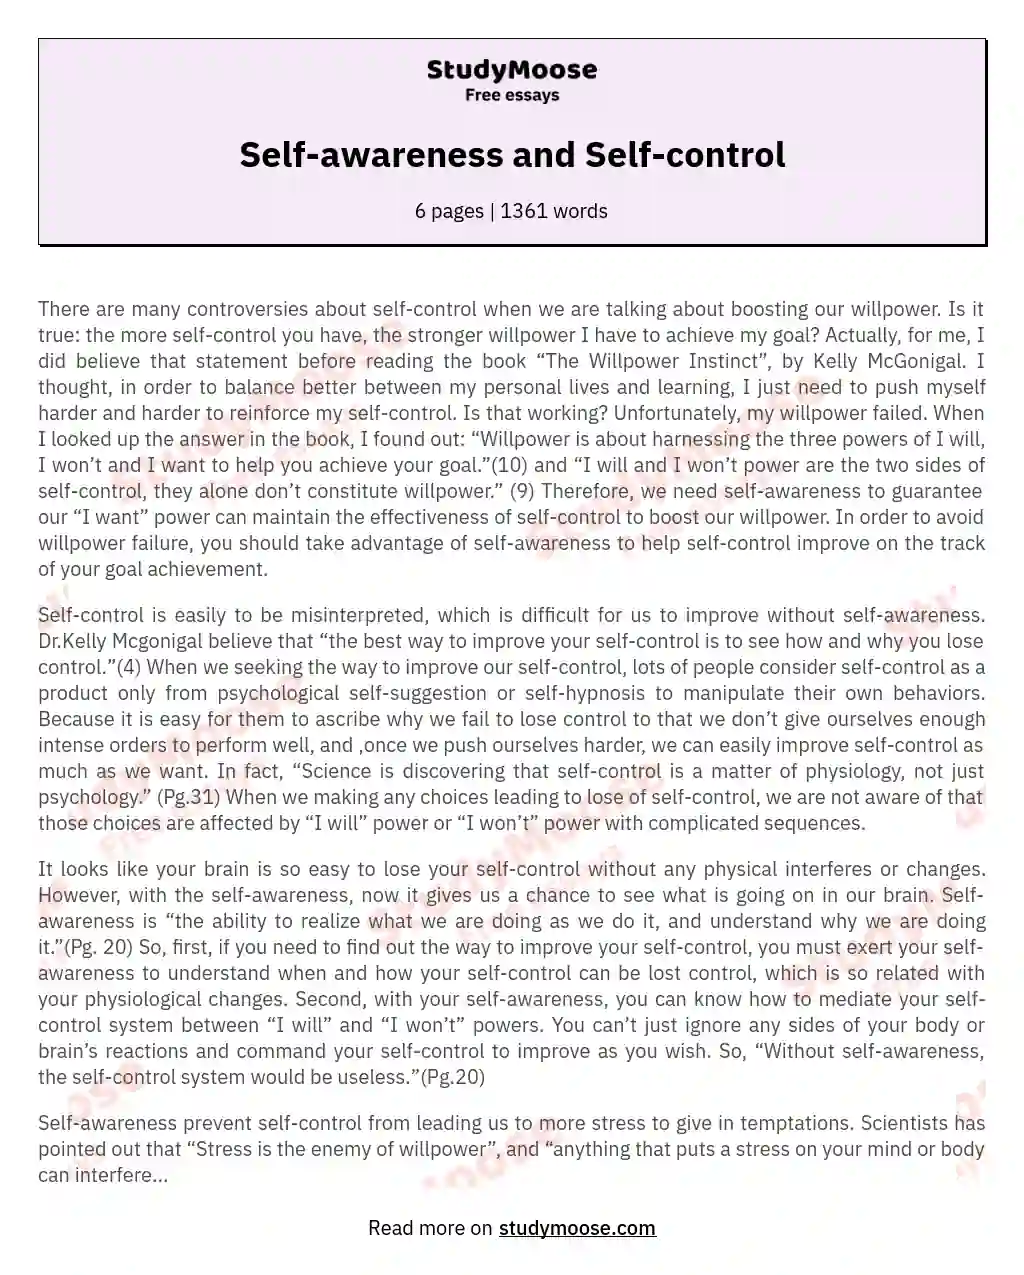 Self-awareness and Self-control essay